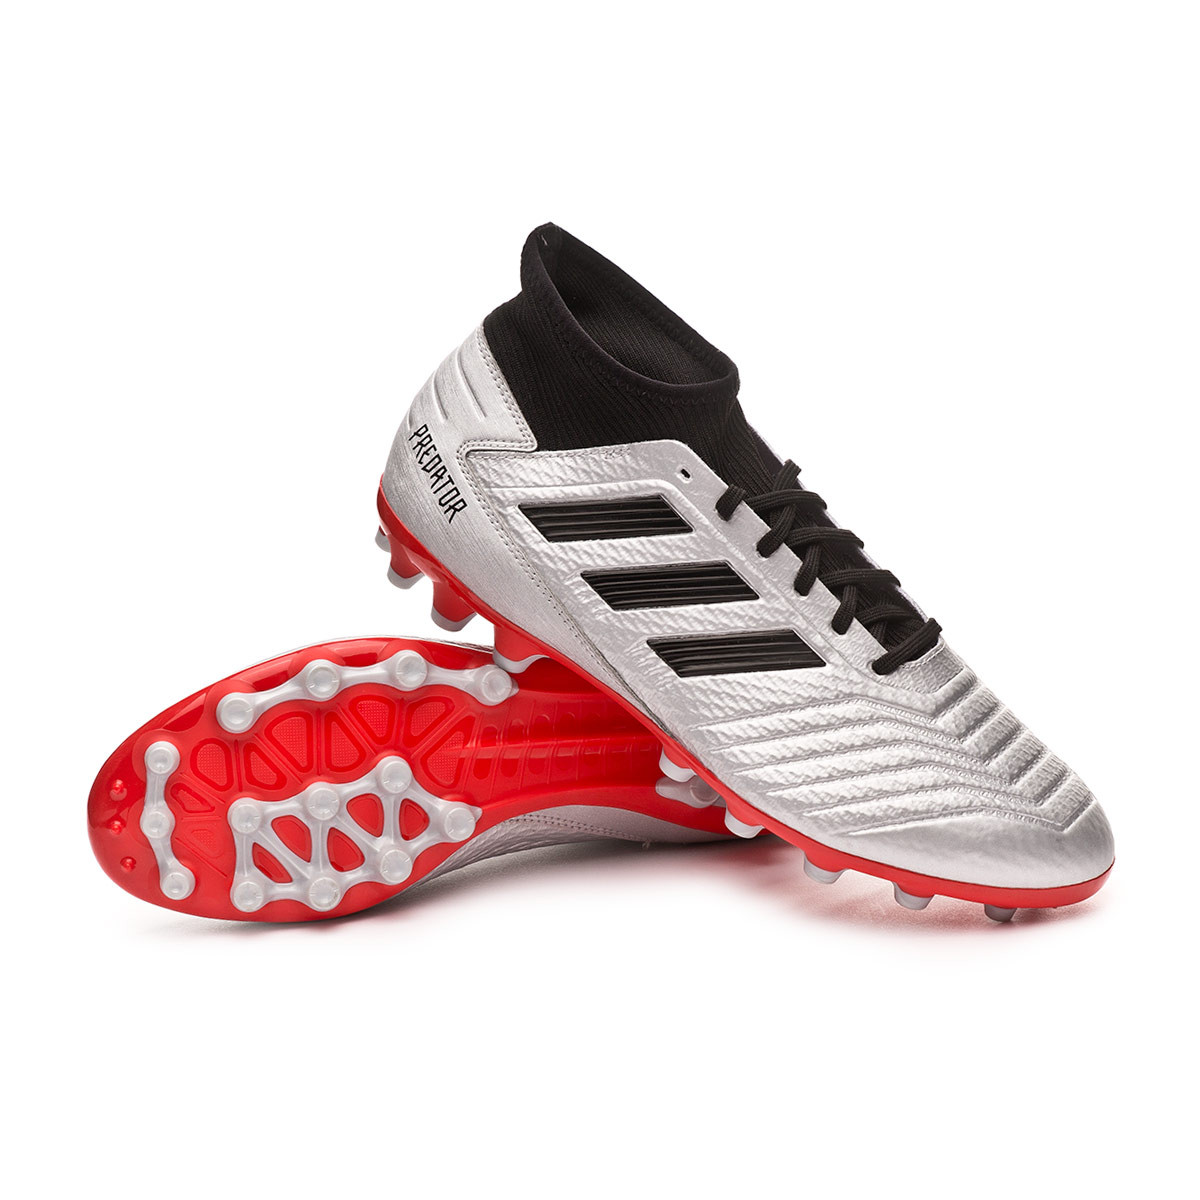 Football Boots adidas Predator 19.3 AG Silver metallic-Core black-Hi red -  Football store Fútbol Emotion